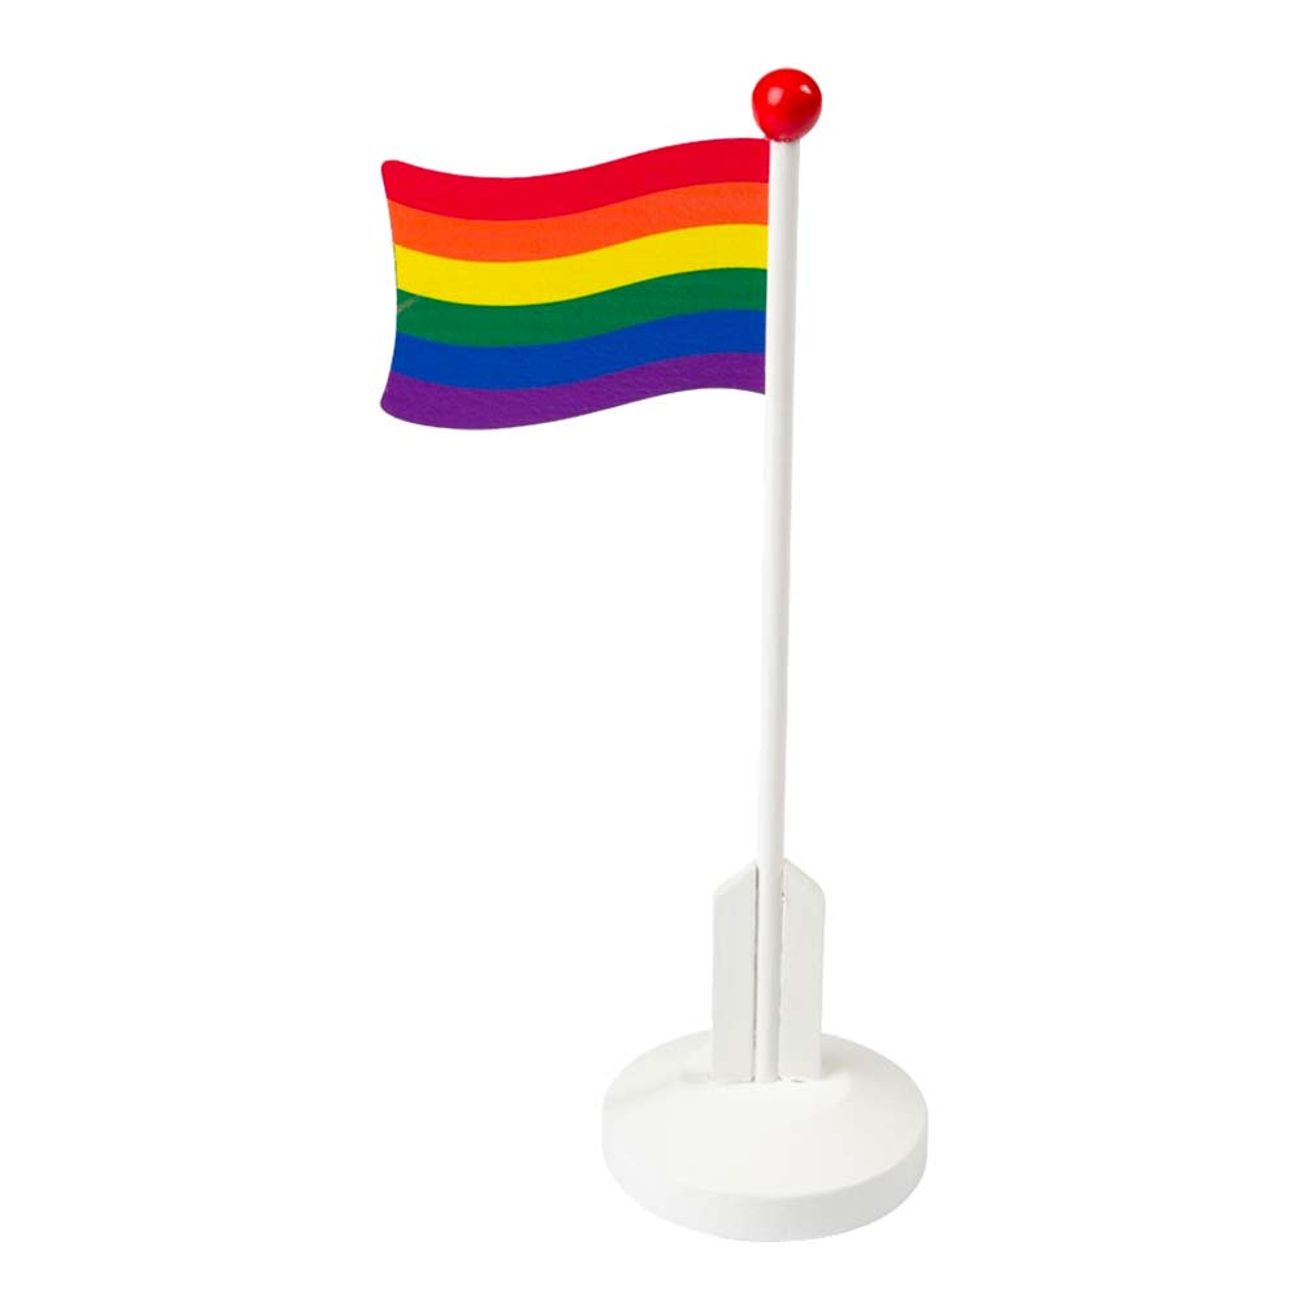 bordsflagga-i-tra-pride-flaggan-93402-1